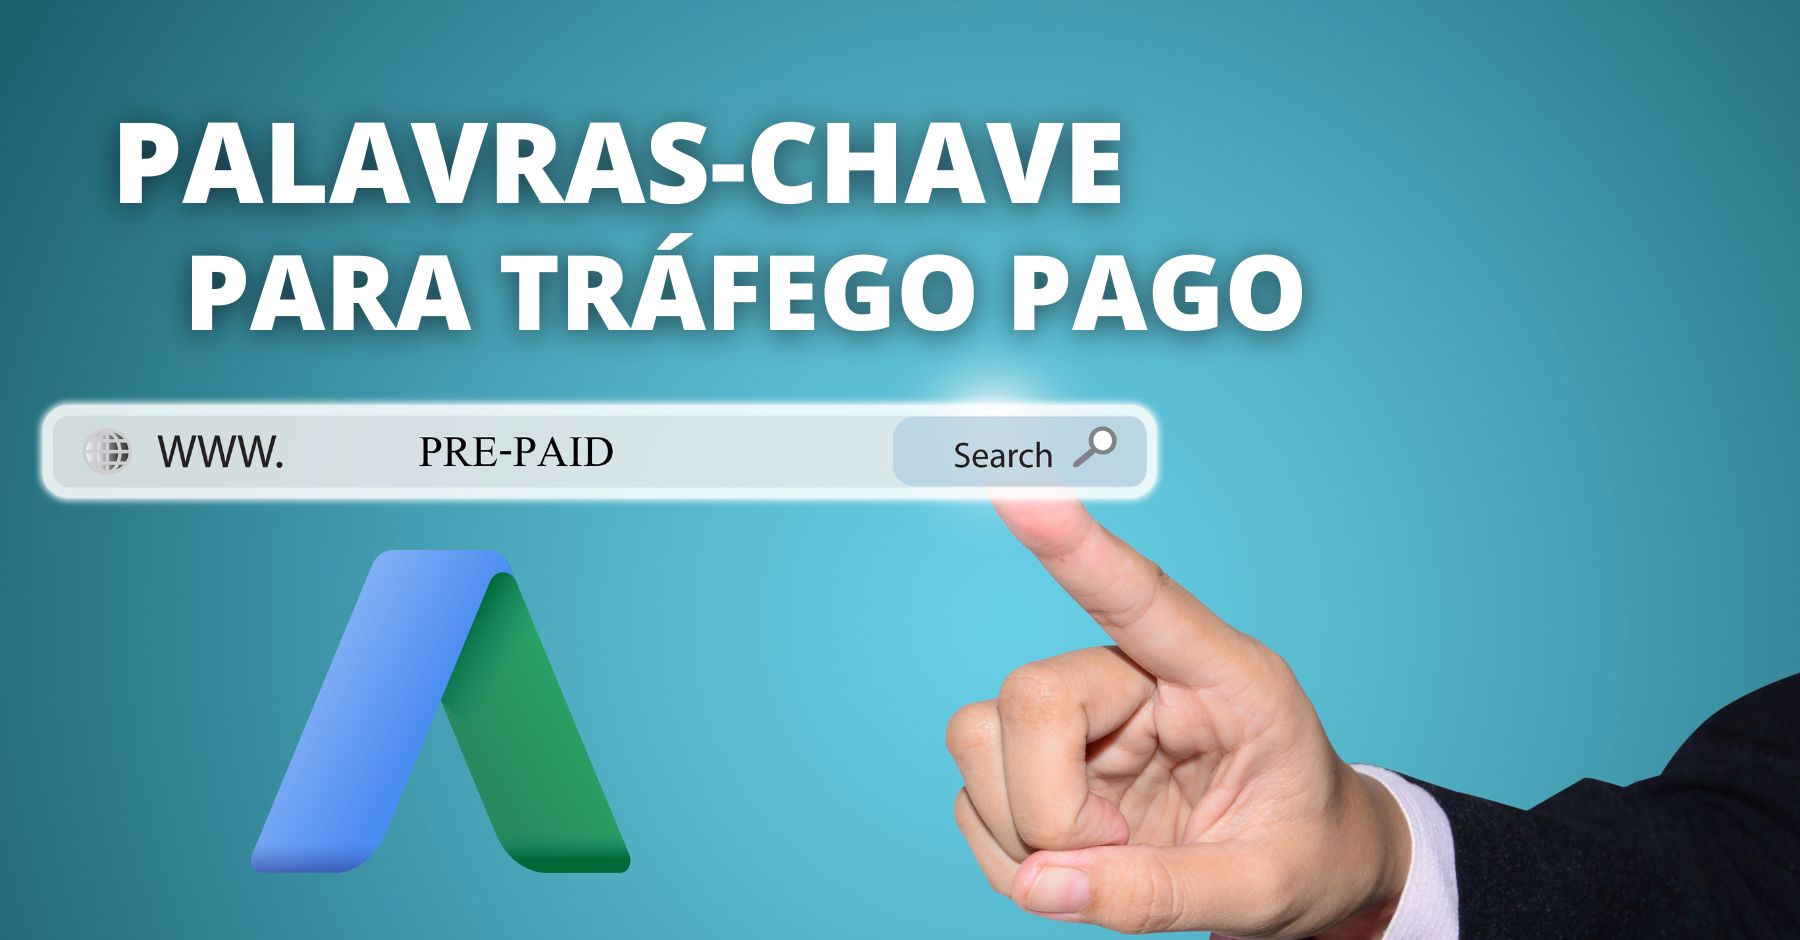 PALAVRAS-CHAVE PARA TRÁFEGO PAGO